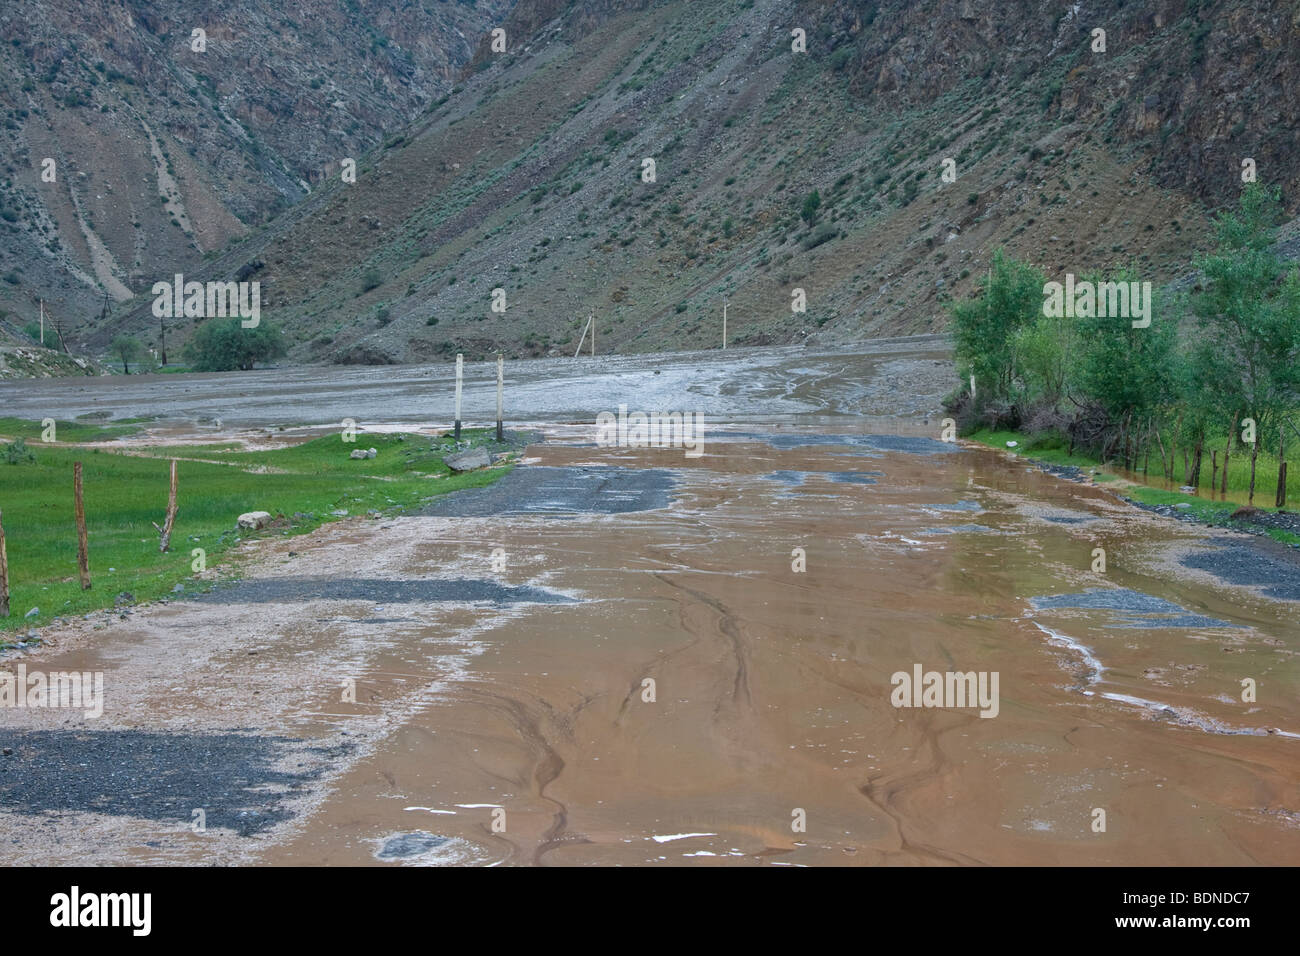 Mudslide covering the road in rural Kyrgyzstan Stock Photo